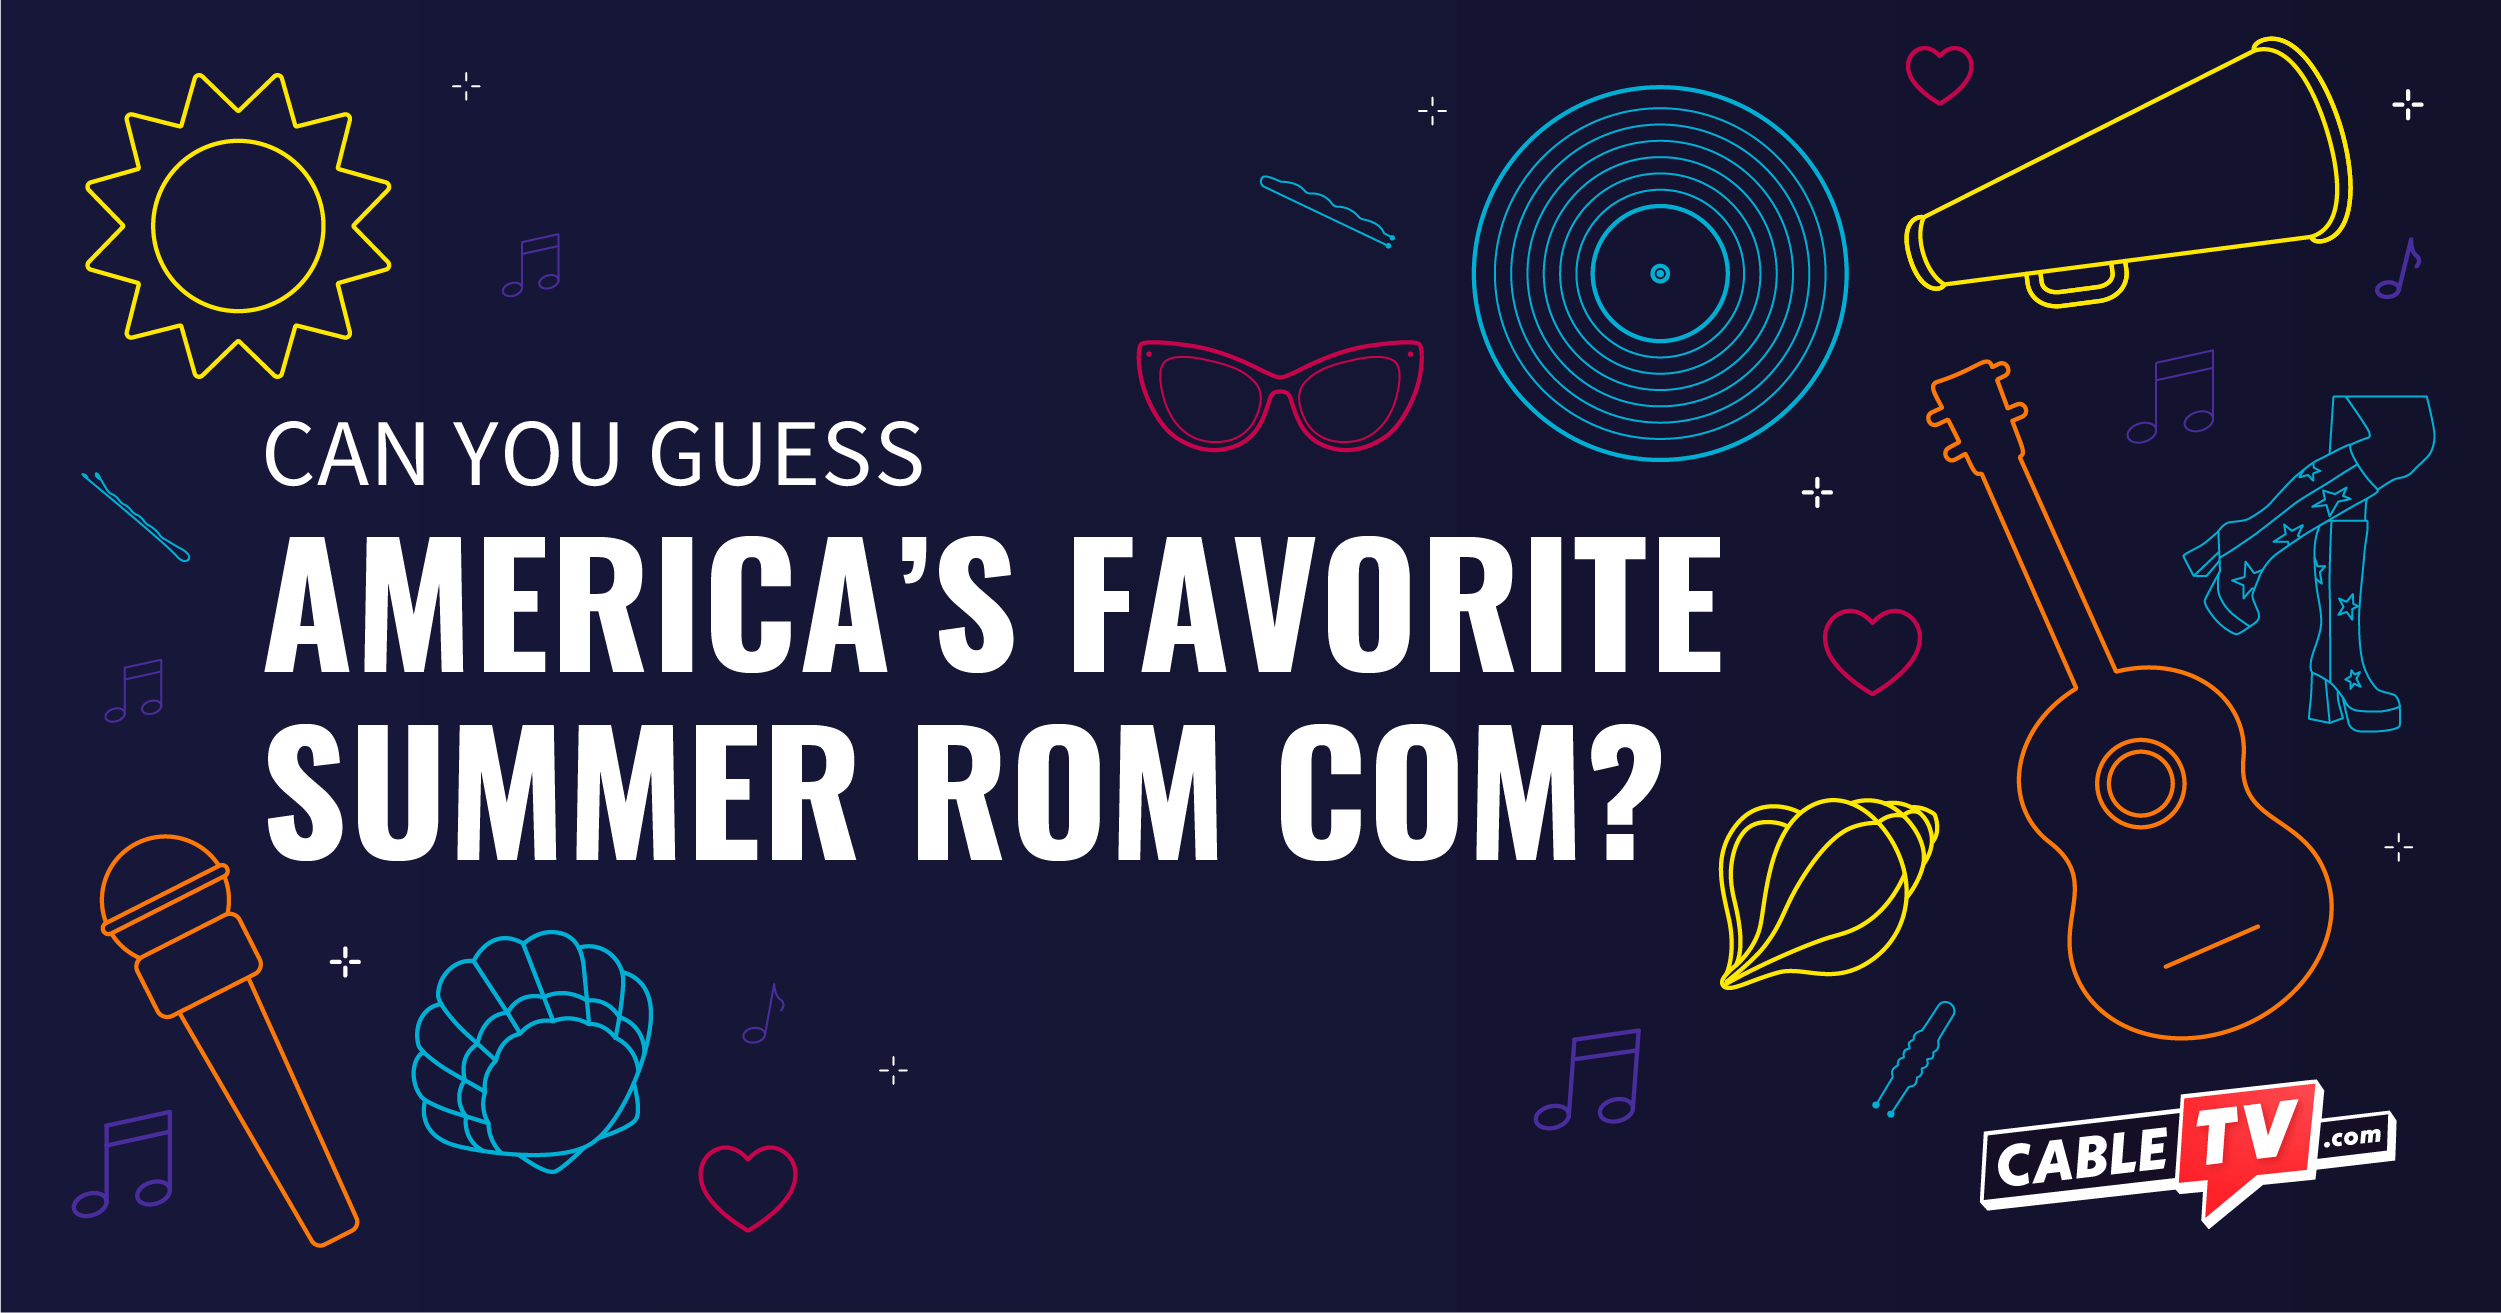 America's favorite summer rom com